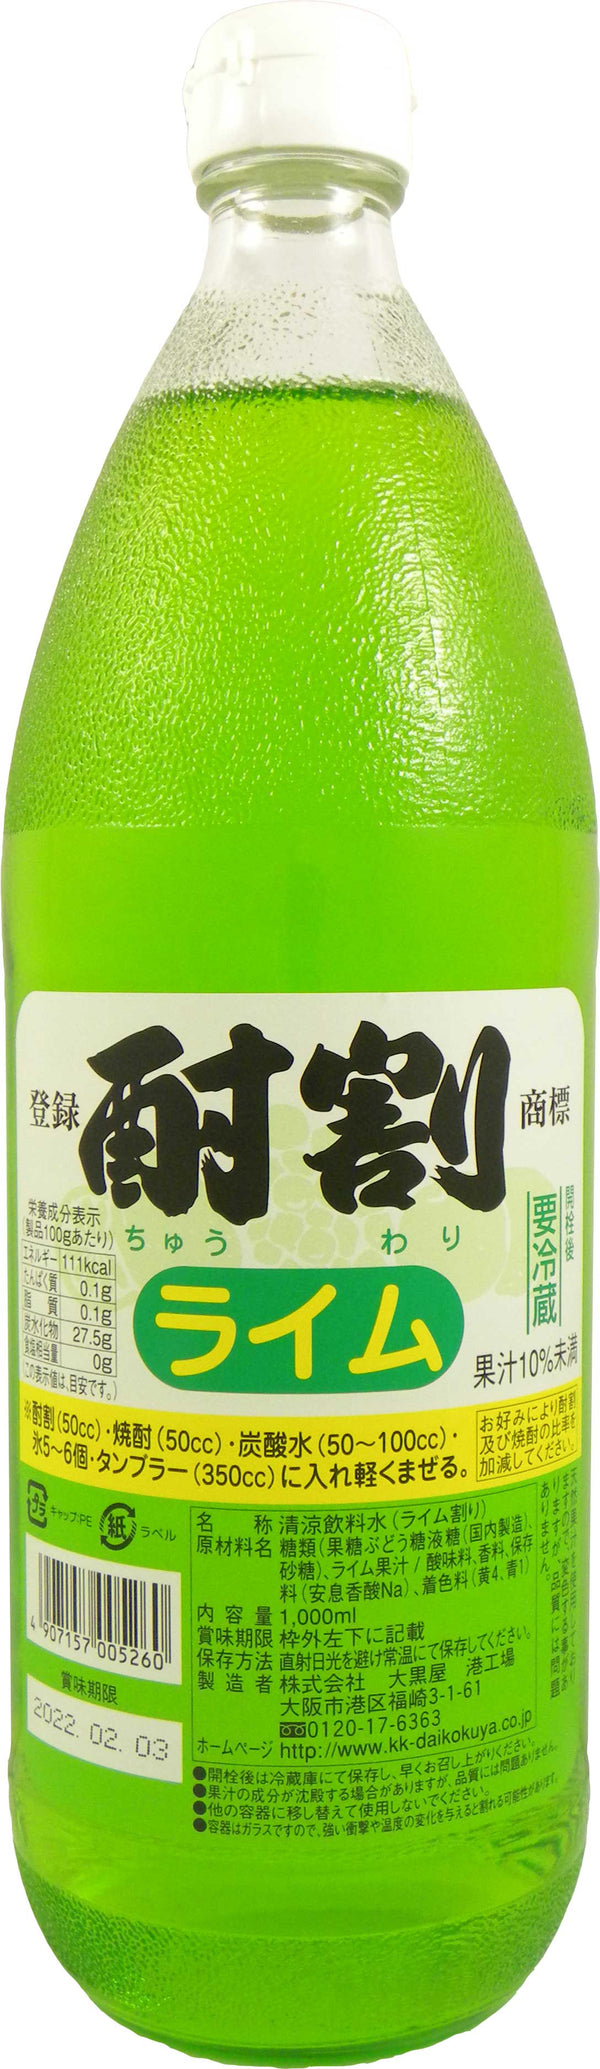 Daikokuya Chuwari Lime 1L Bottle Syrup for Commercial Use